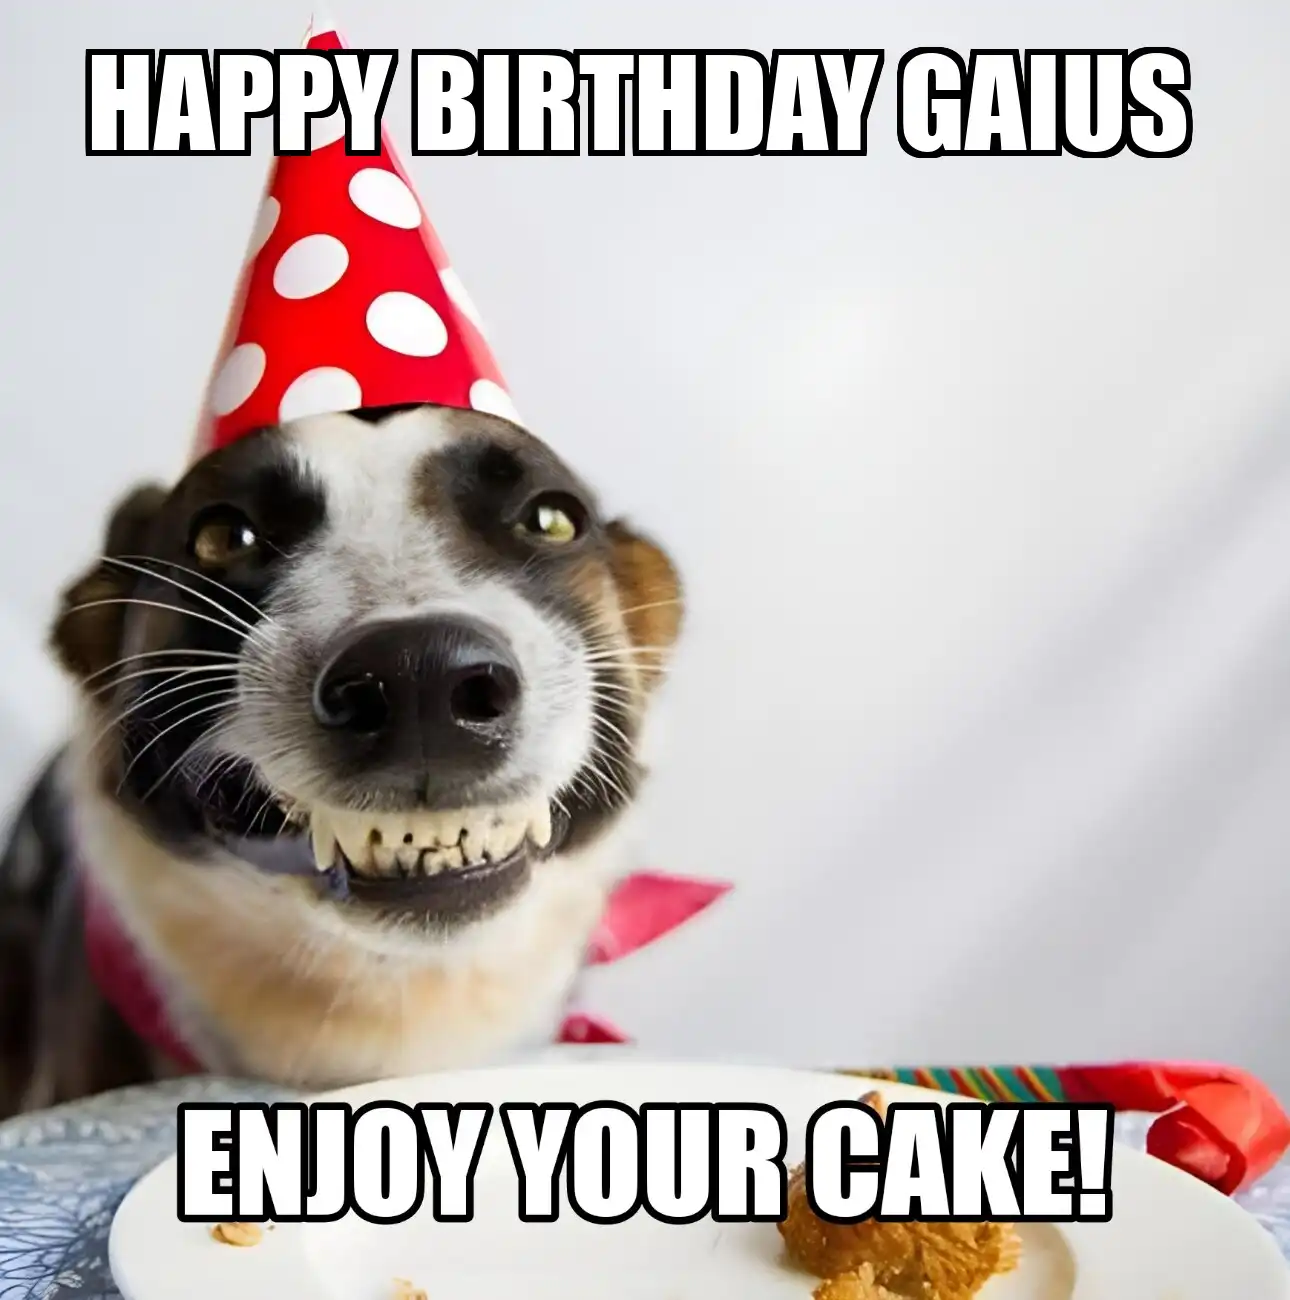 Happy Birthday Gaius Enjoy Your Cake Dog Meme